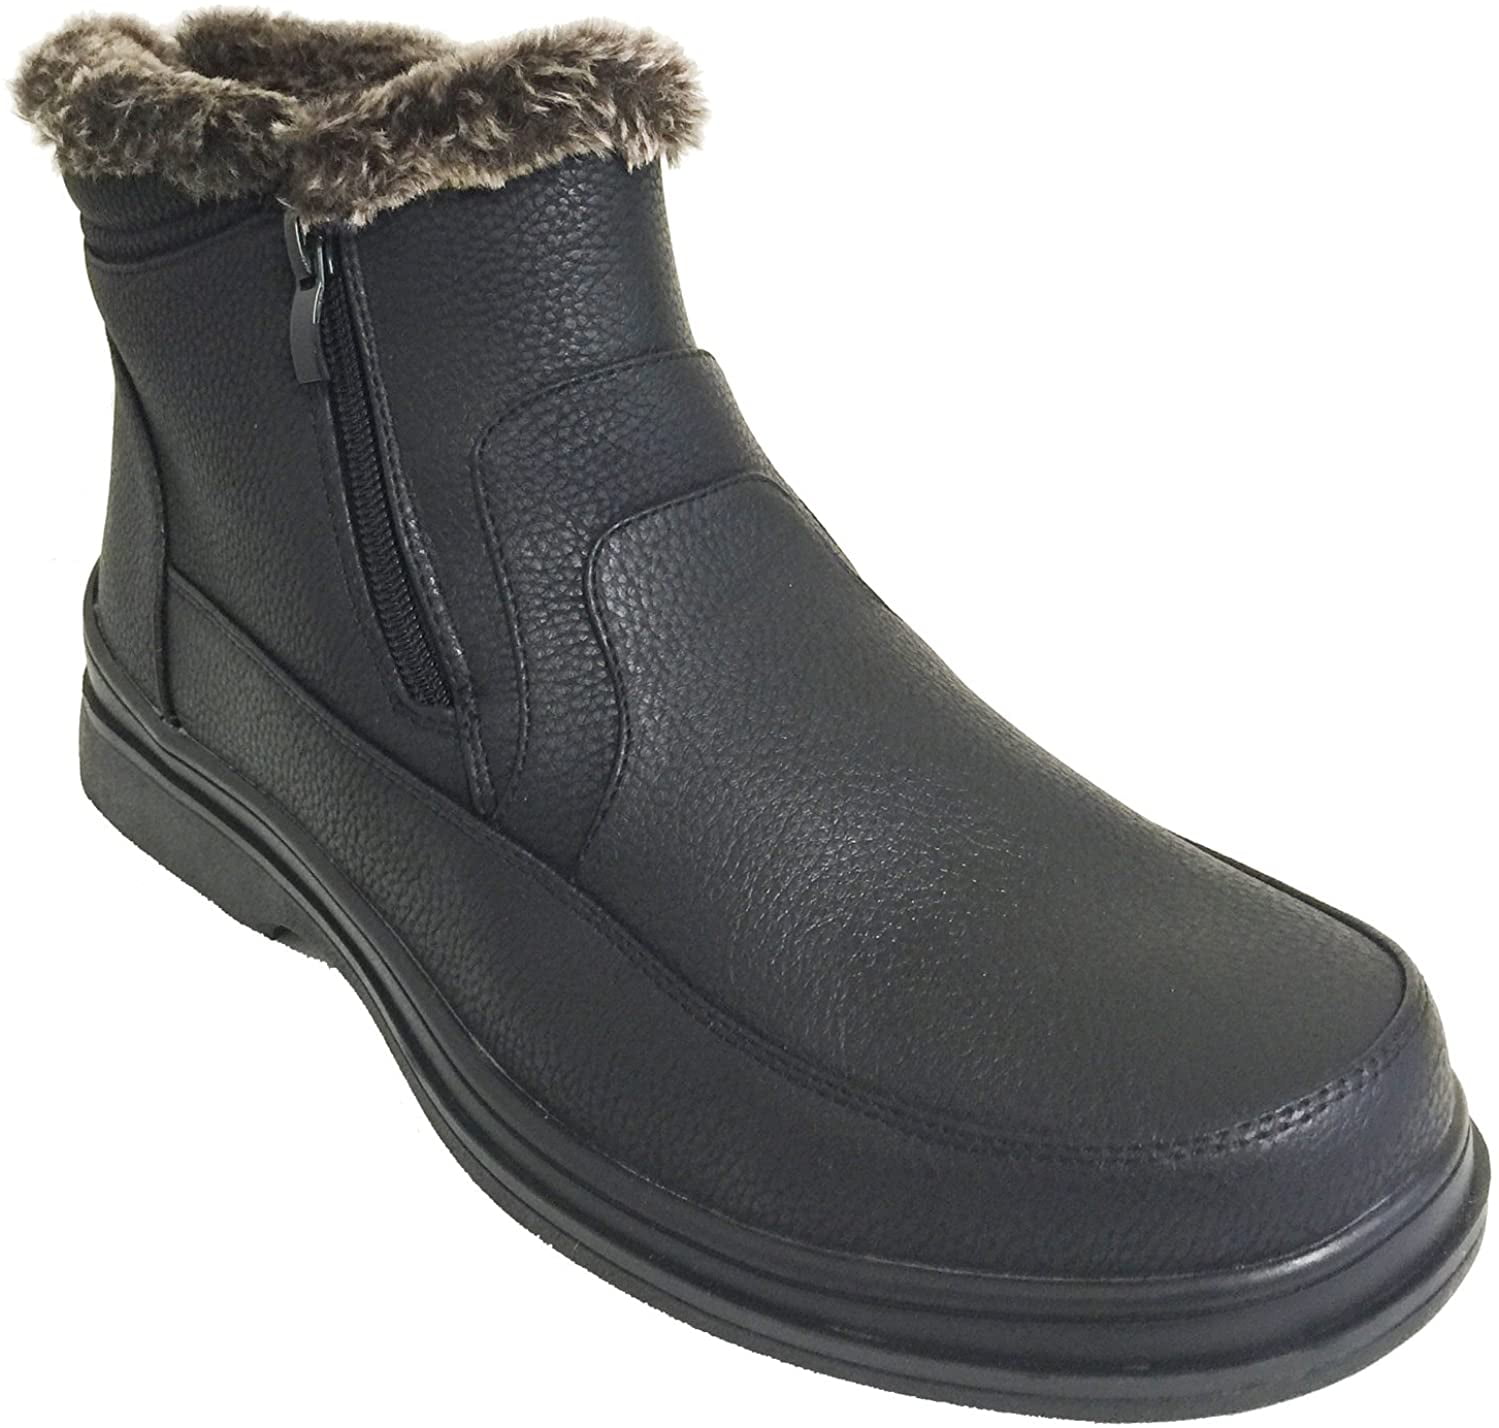 Warm Men Winter Boots for Men Warm Snow Shoes Mens Ankle Snow Boot 